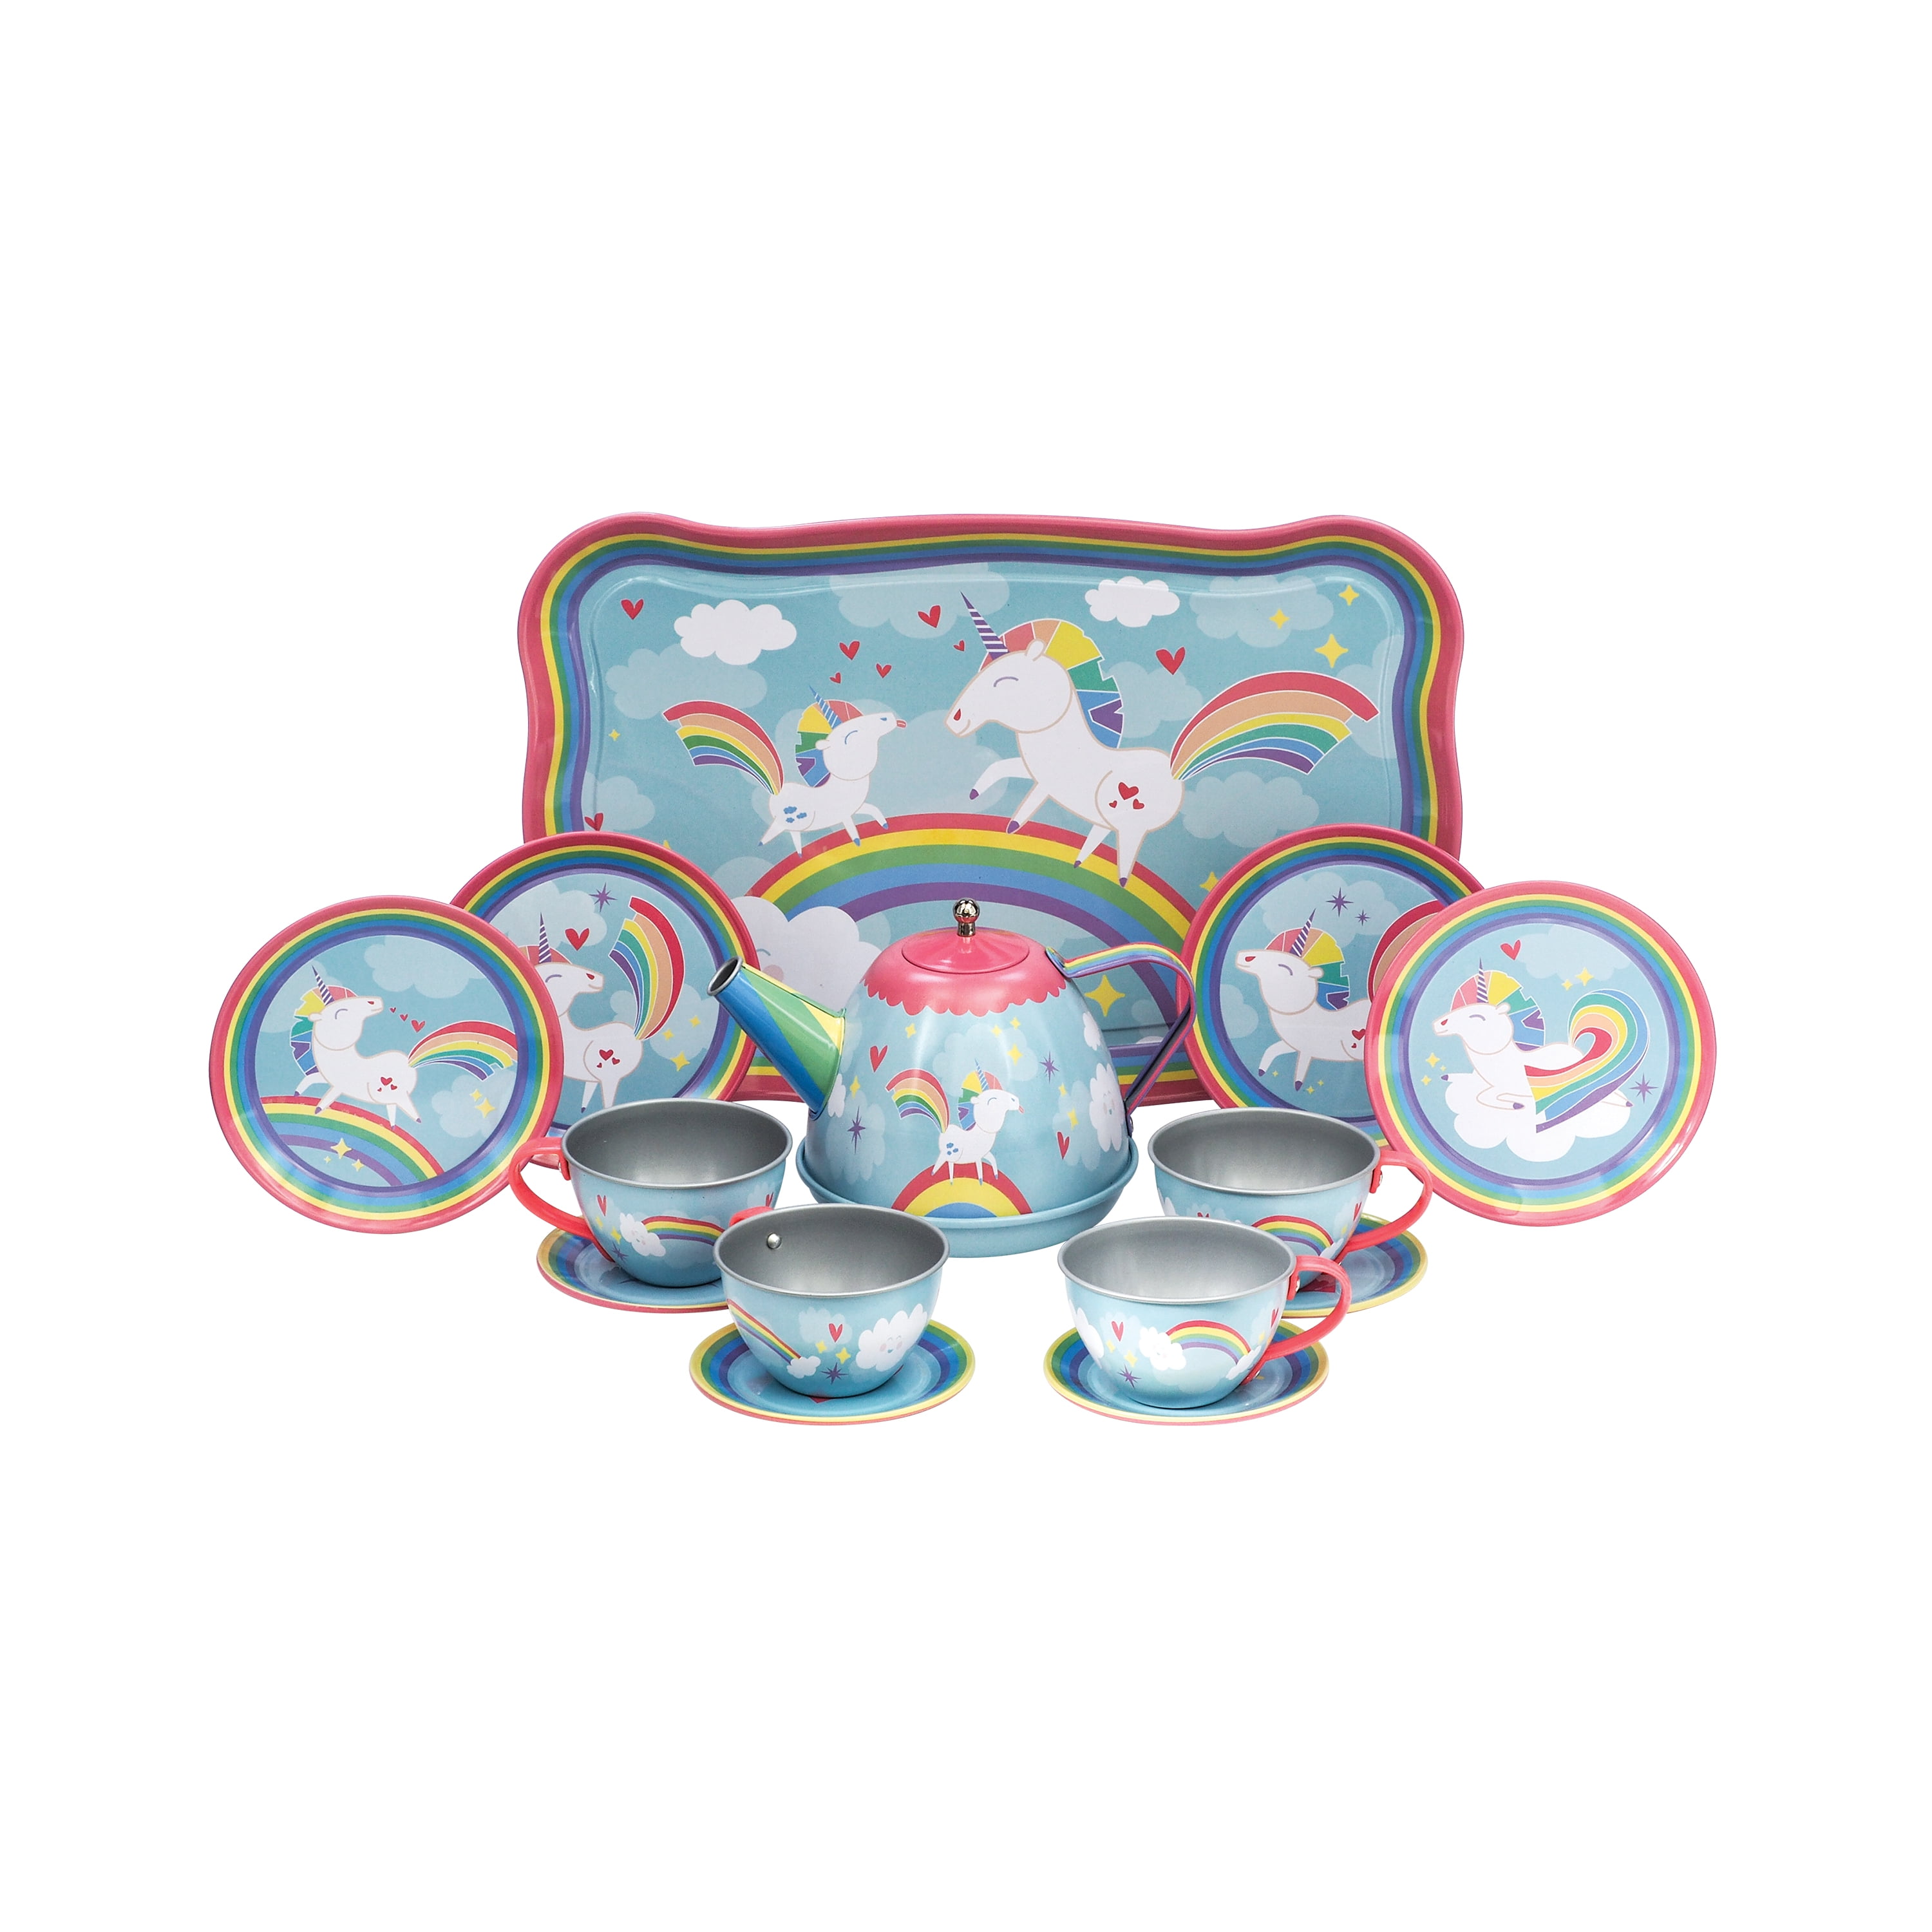 Schylling Mermaid Tin Tea Set 34028 for sale online 